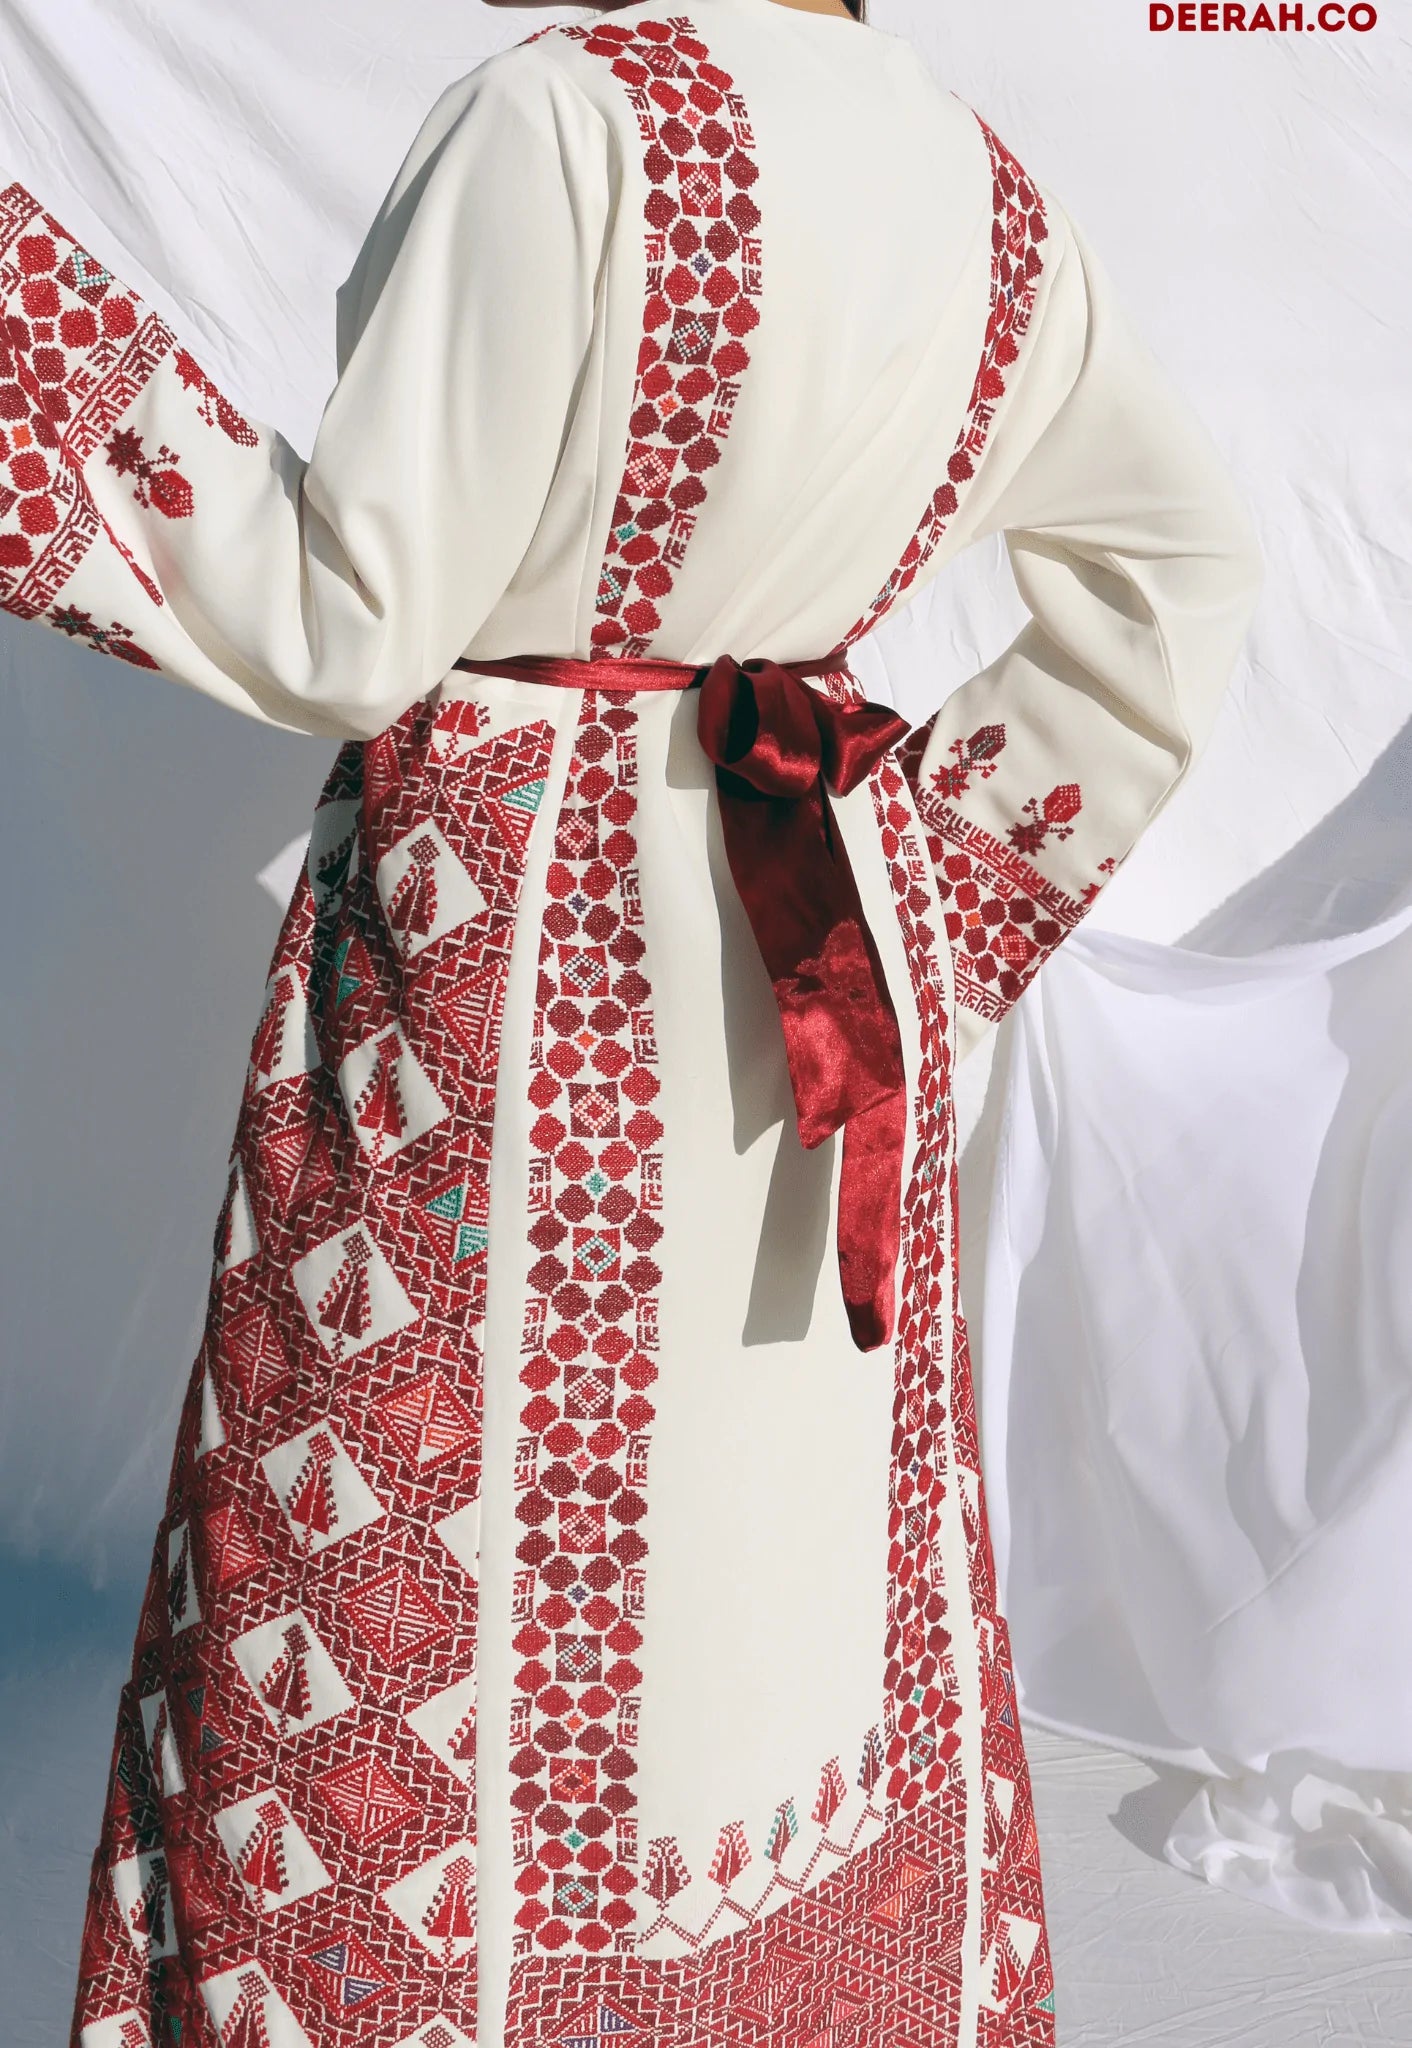 Eman - Hand Embroidered White Palestinian Wedding Dress Deerah